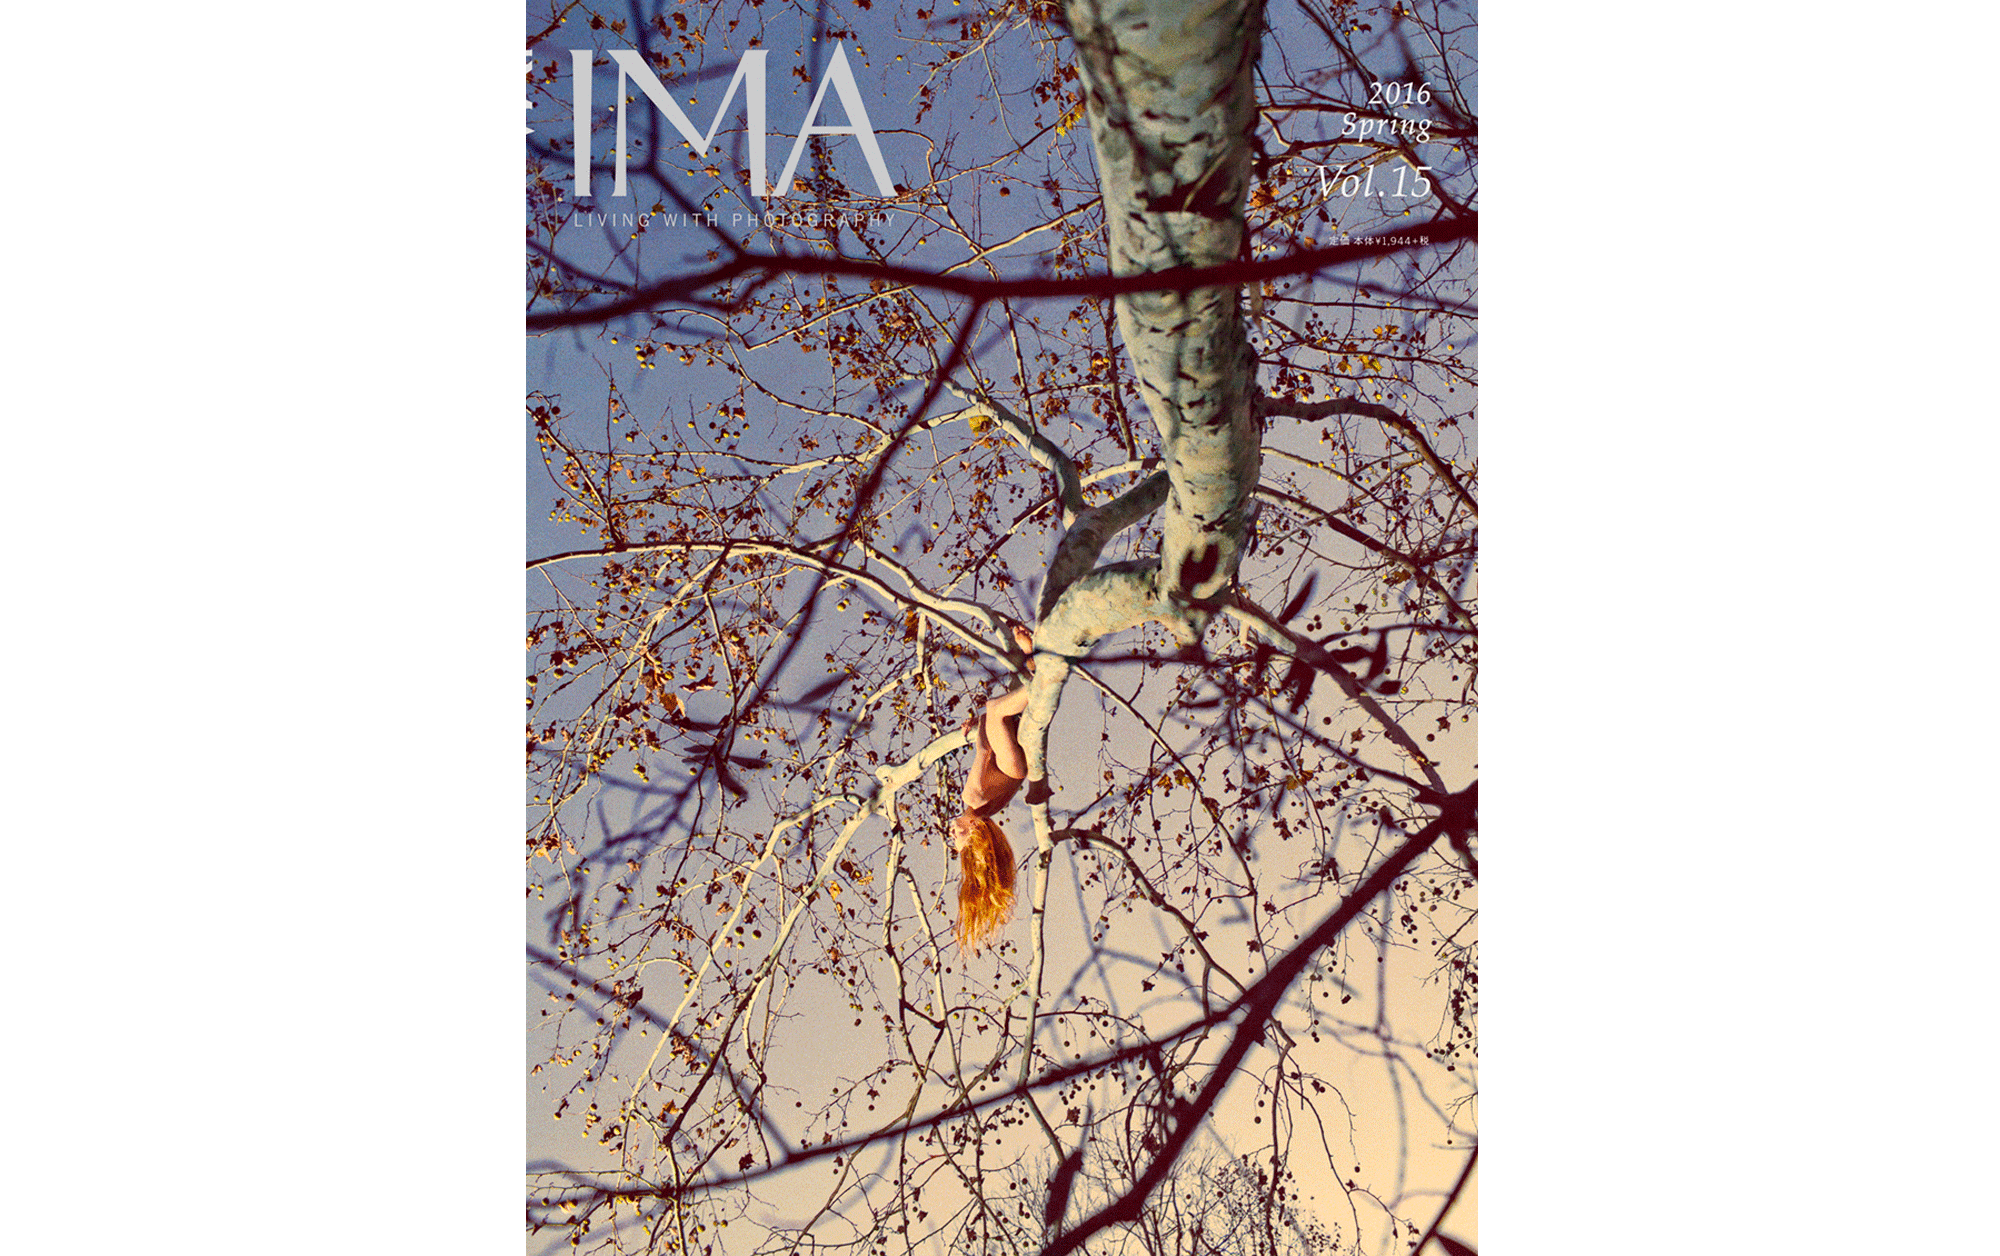 IMA 2016 Spring Vol.15 | Event | IMA ONLINE